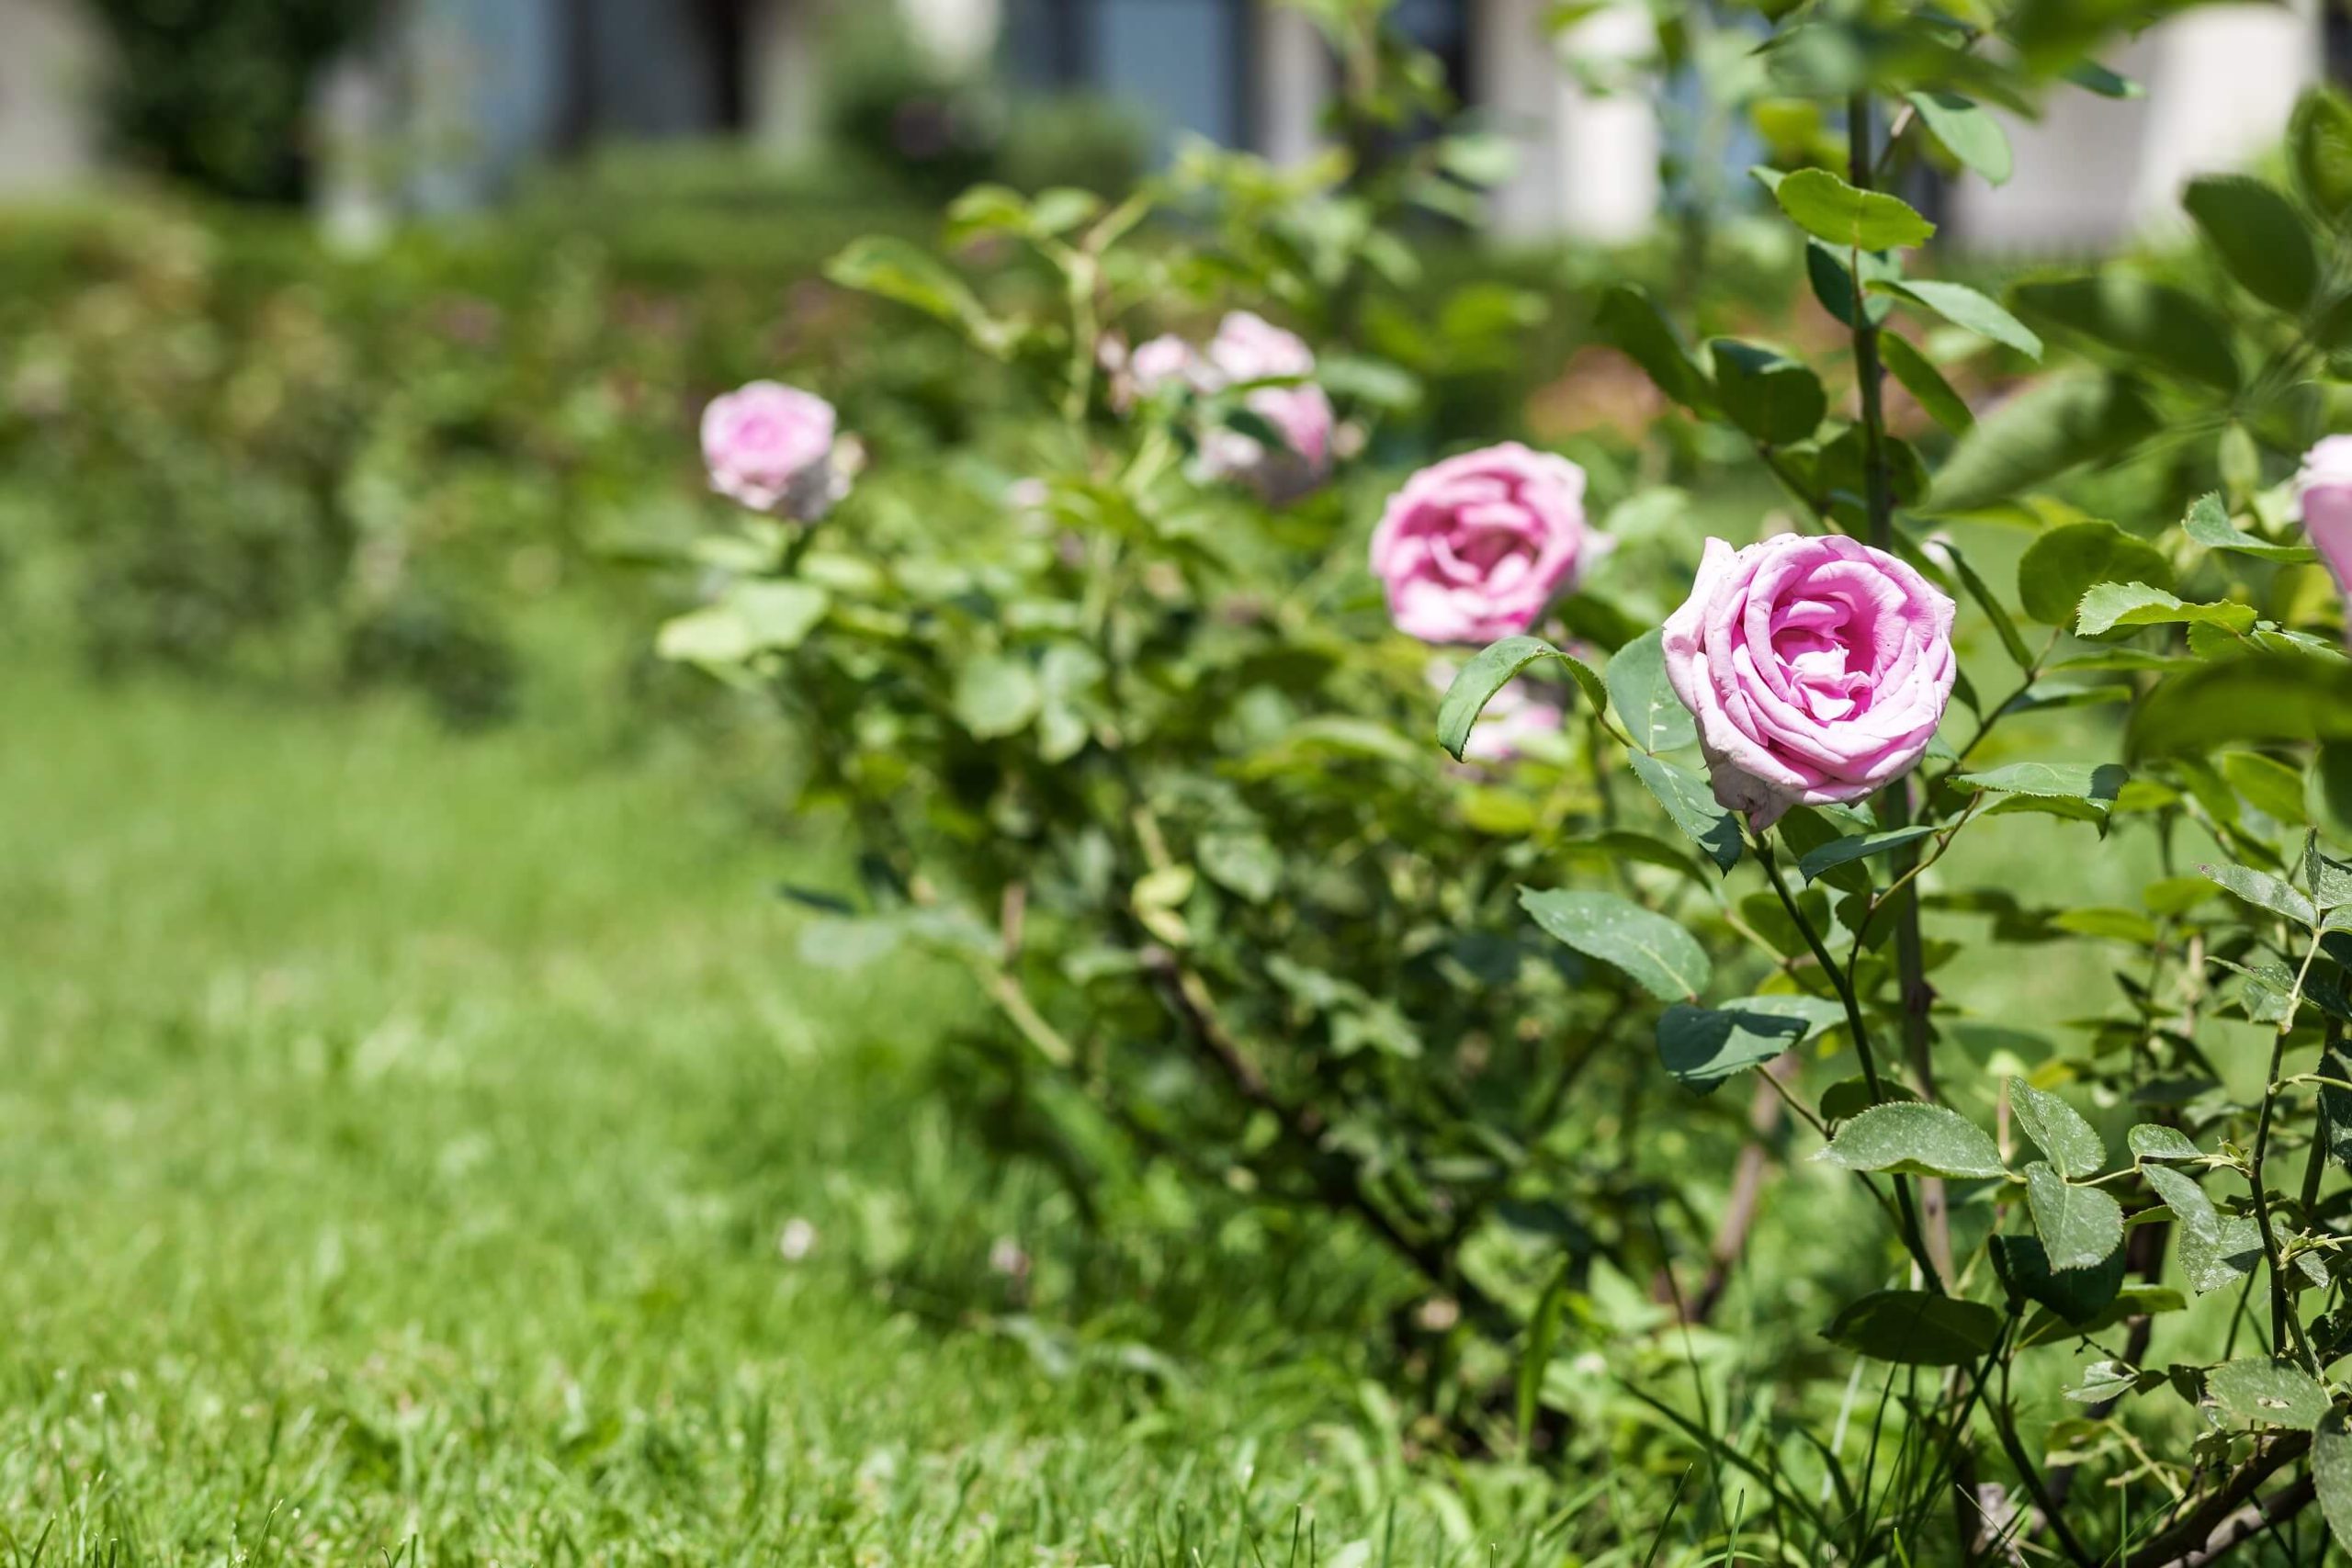 A photo of a rose bush